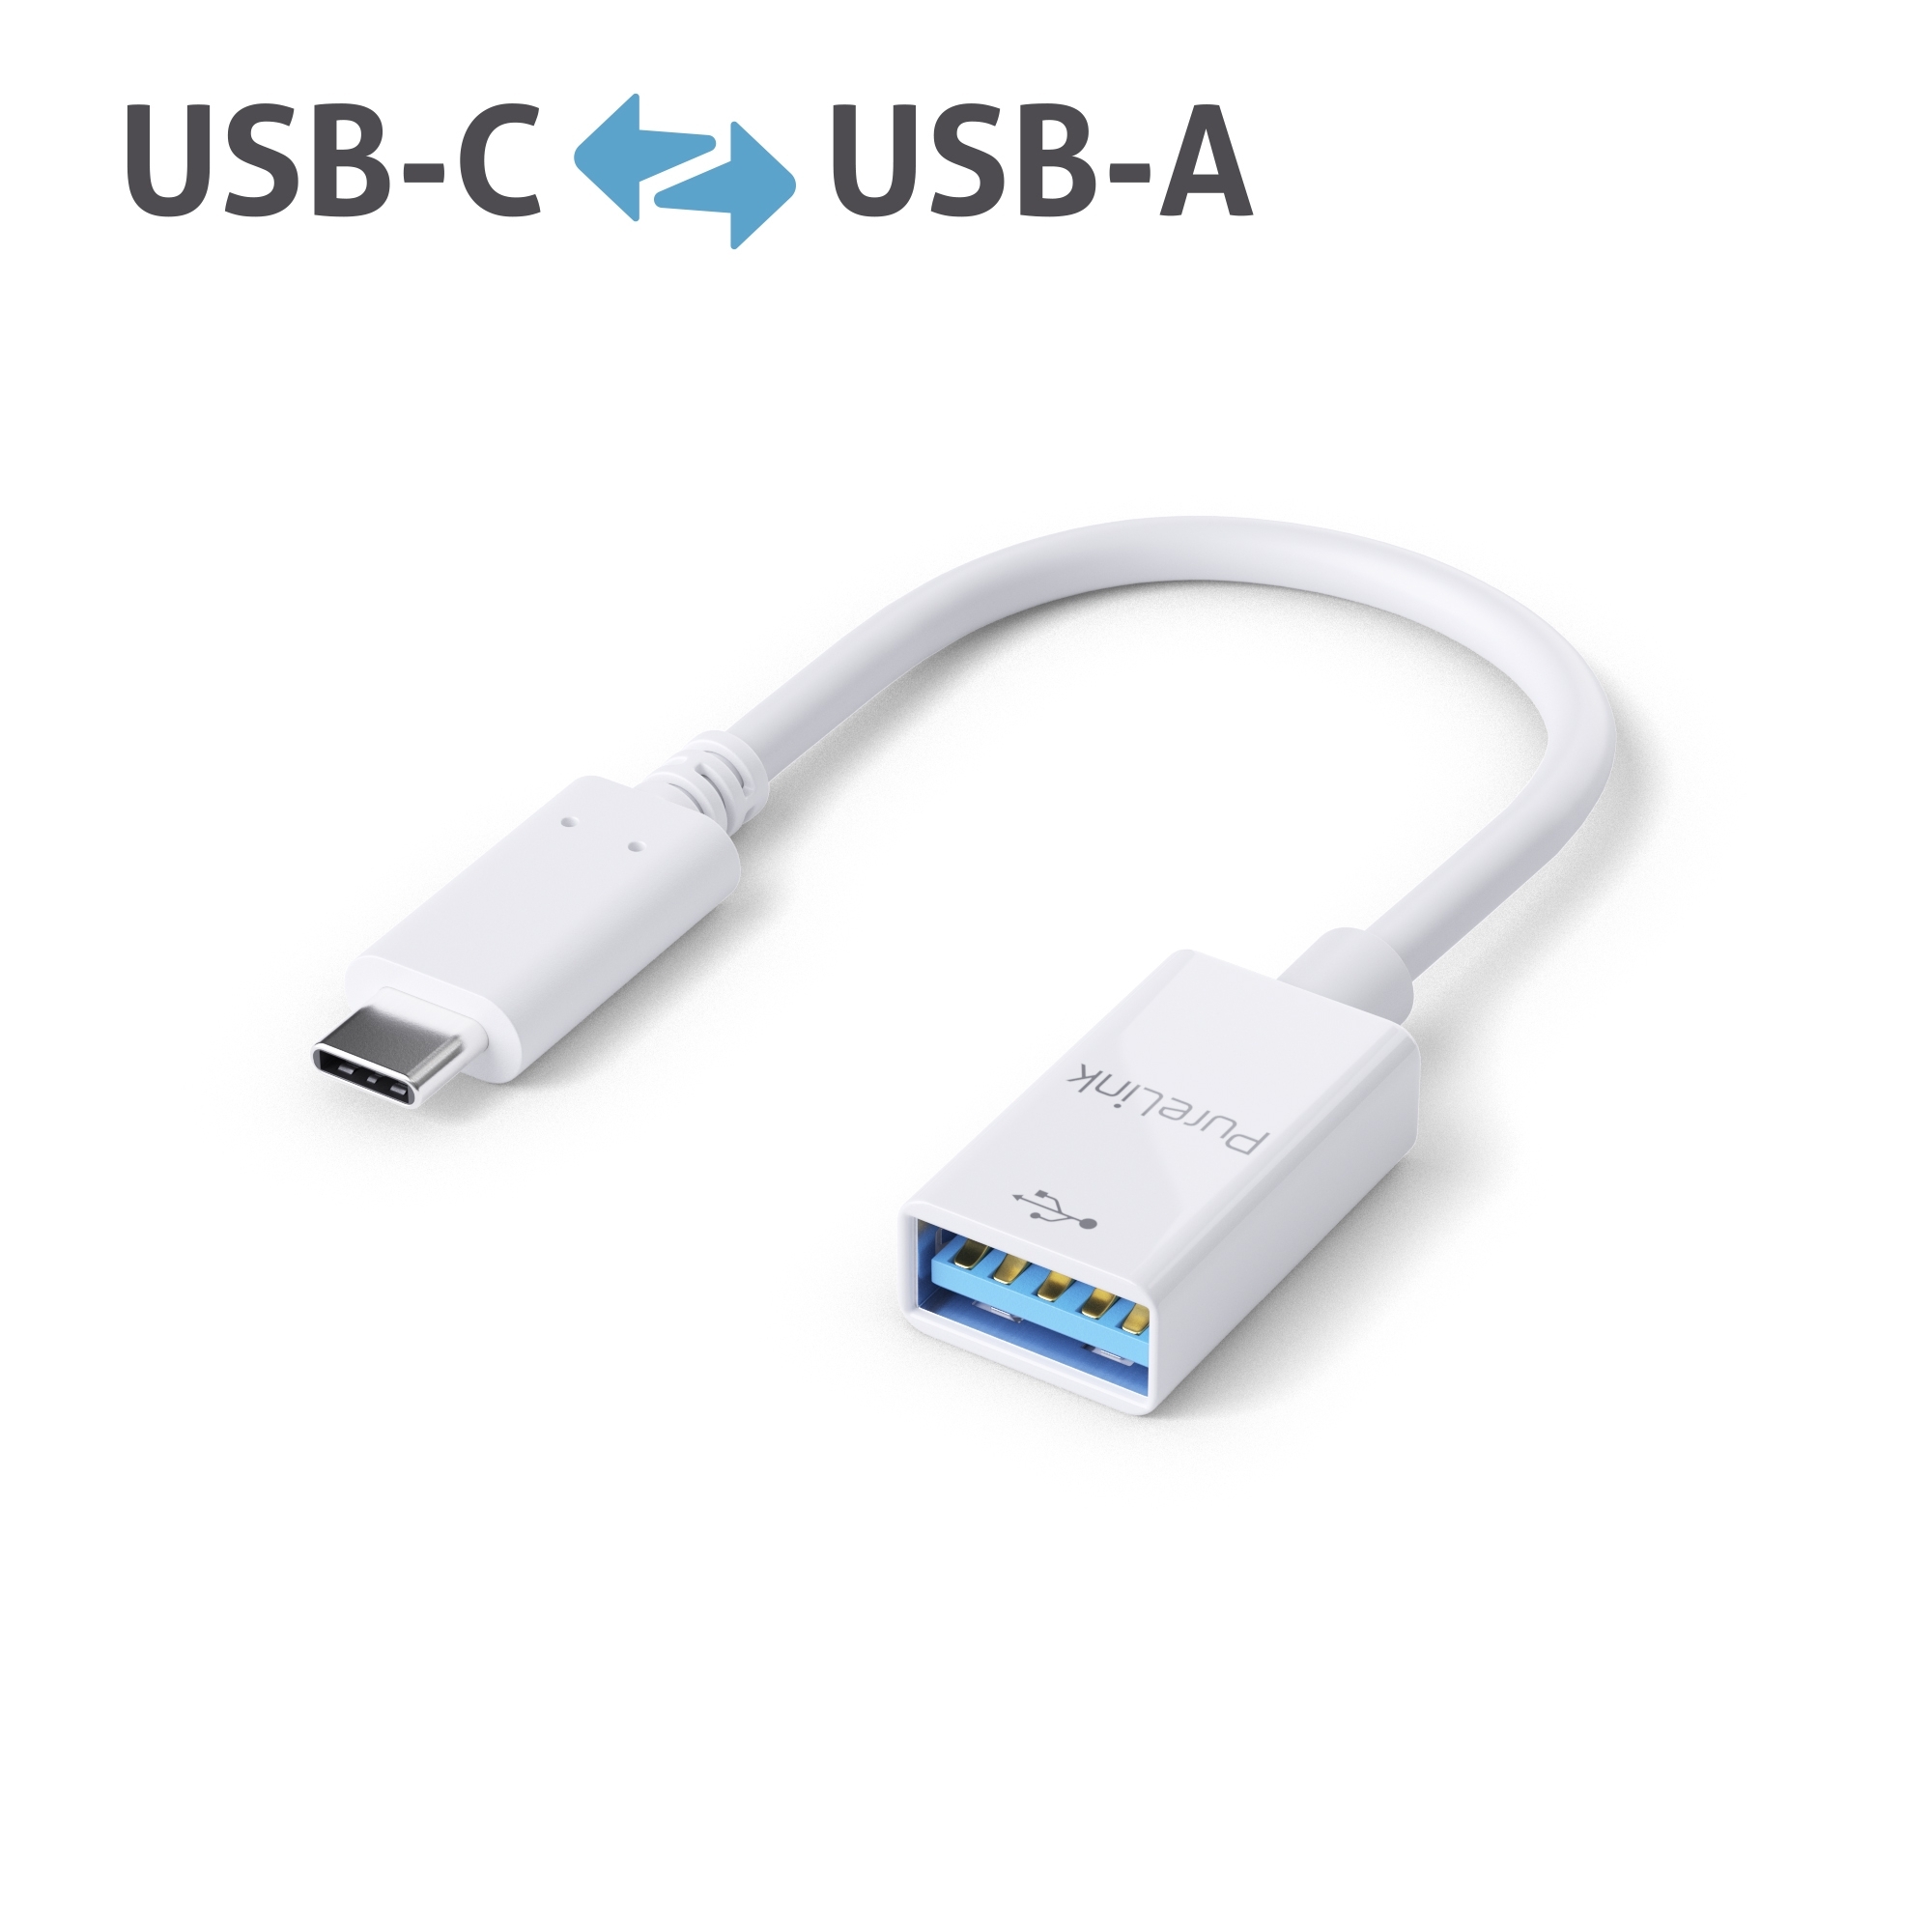 PureLink IS230 USB-C auf USB-A Adapter - USB 3.1 Gen 1 - iSerie 0,10m